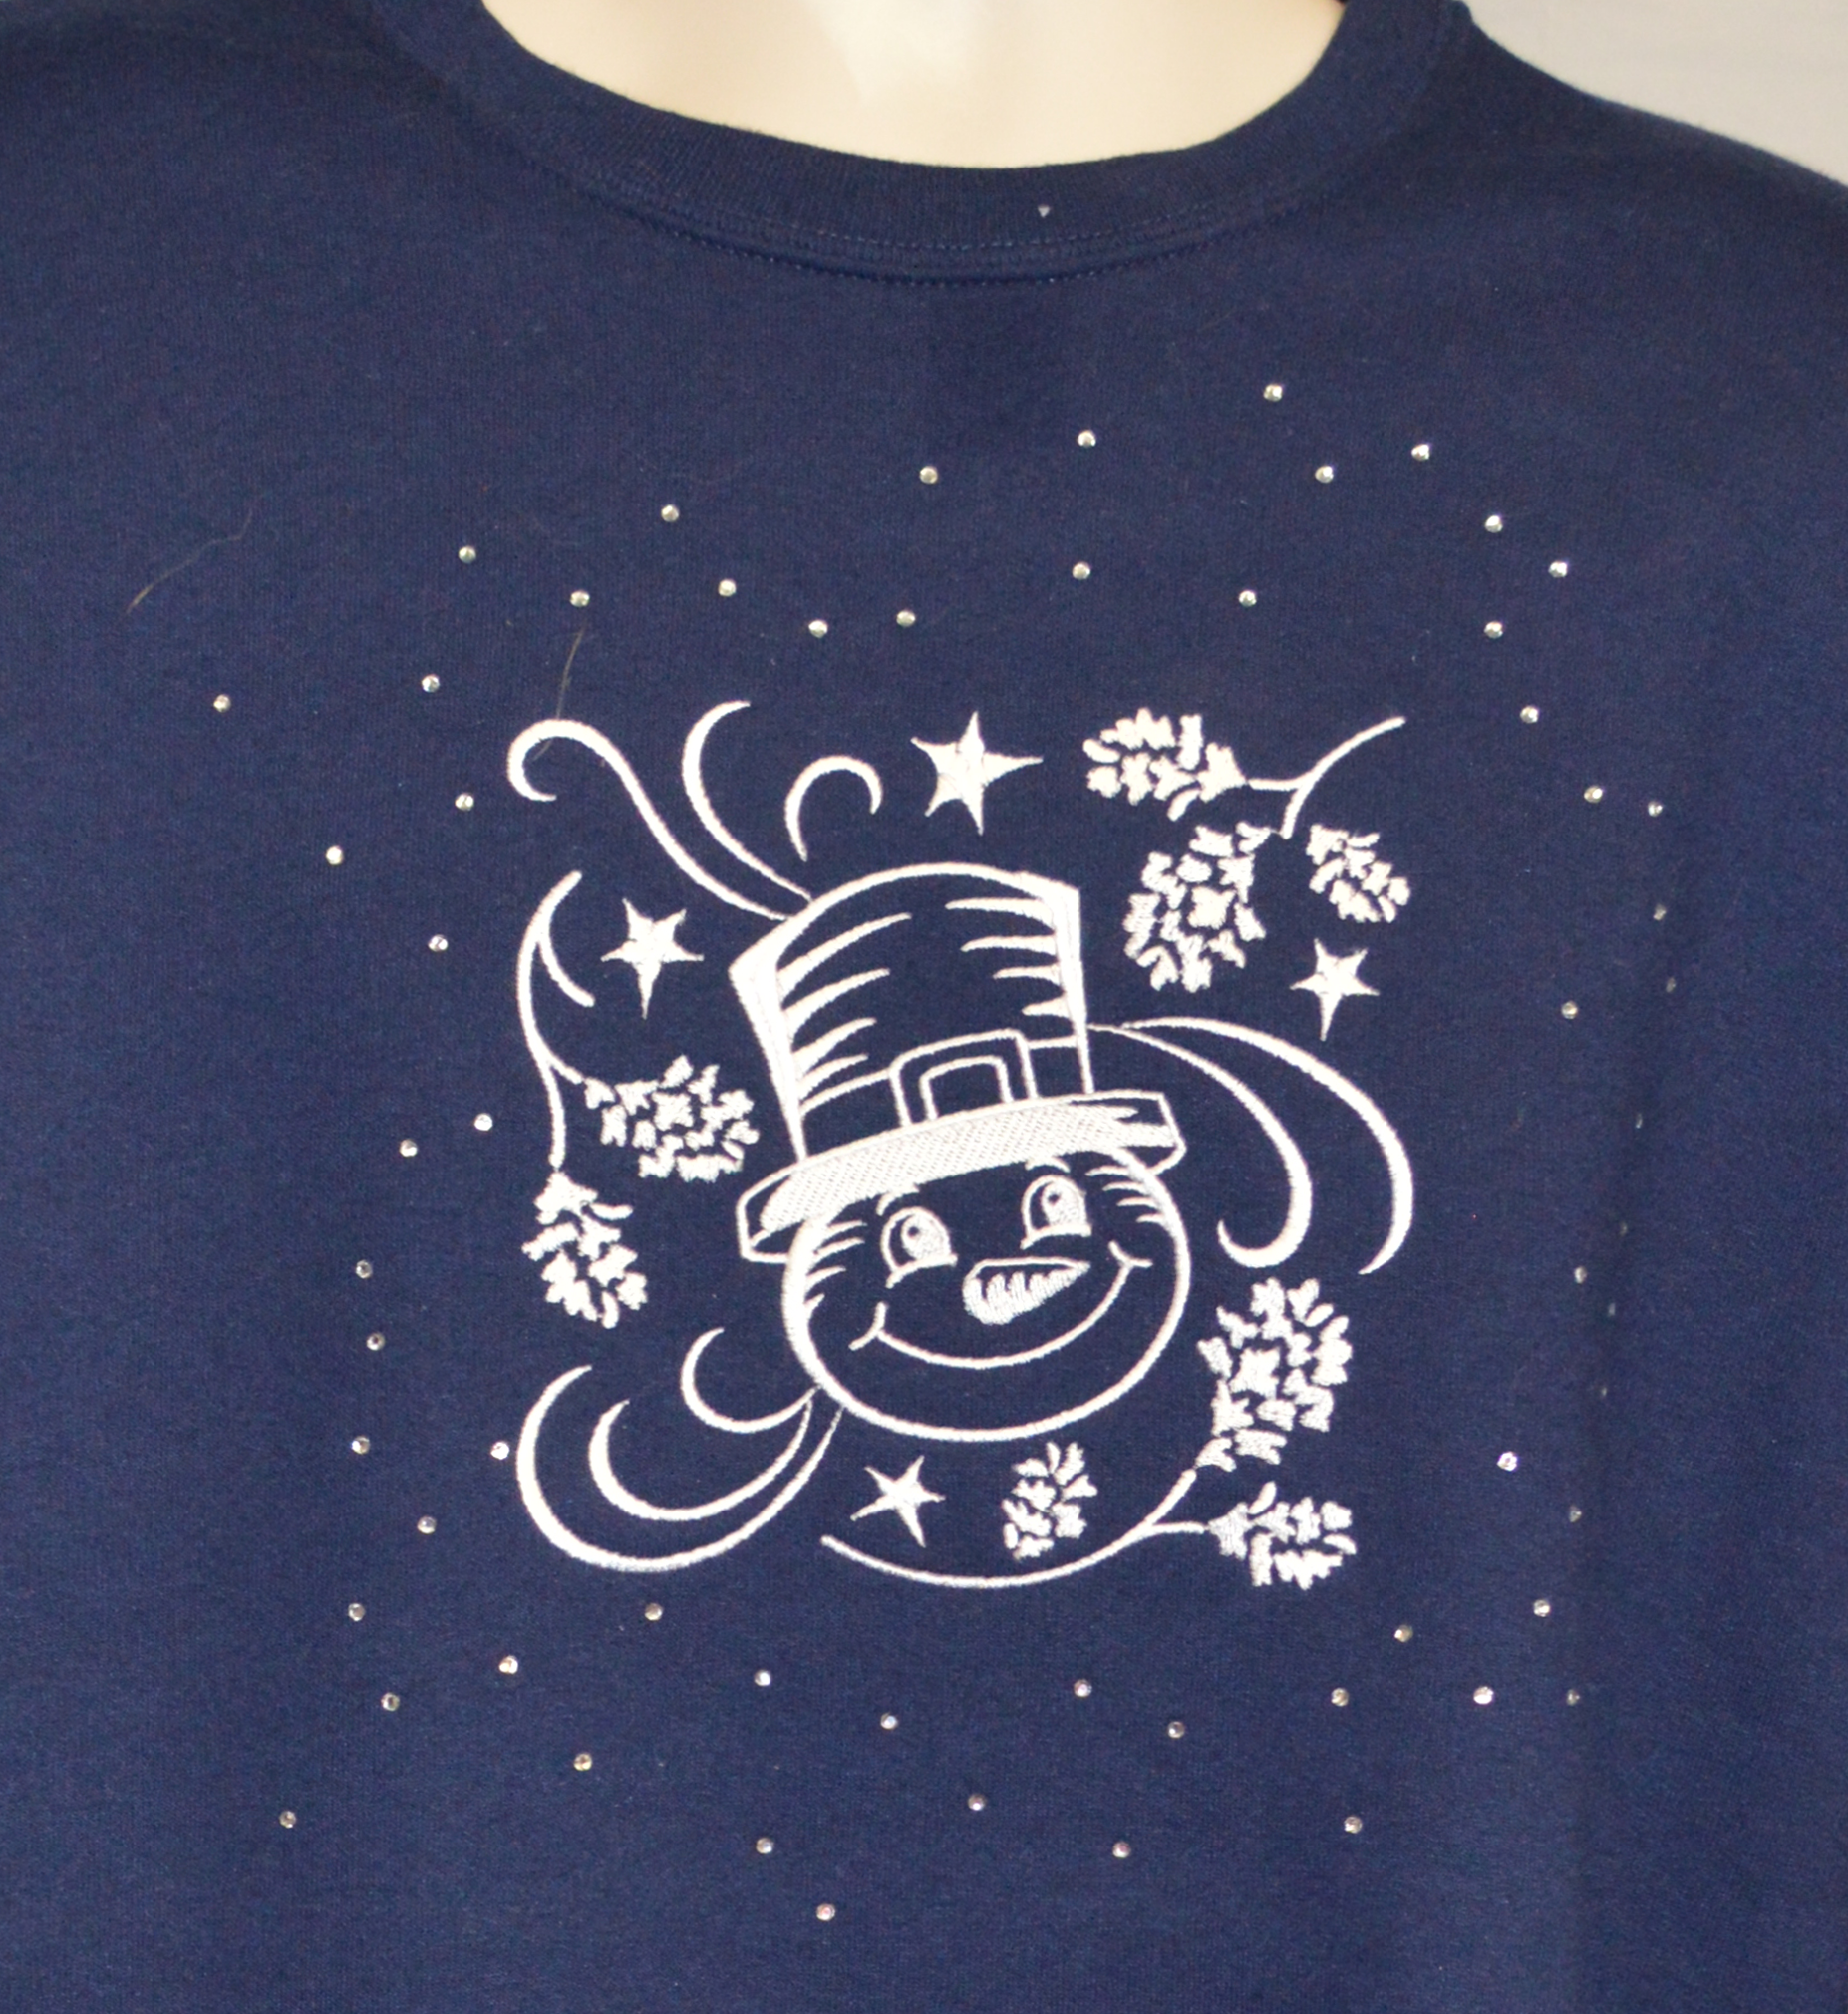 Shop Worldwide Shirts for beautiful embroidered sweatshirts.